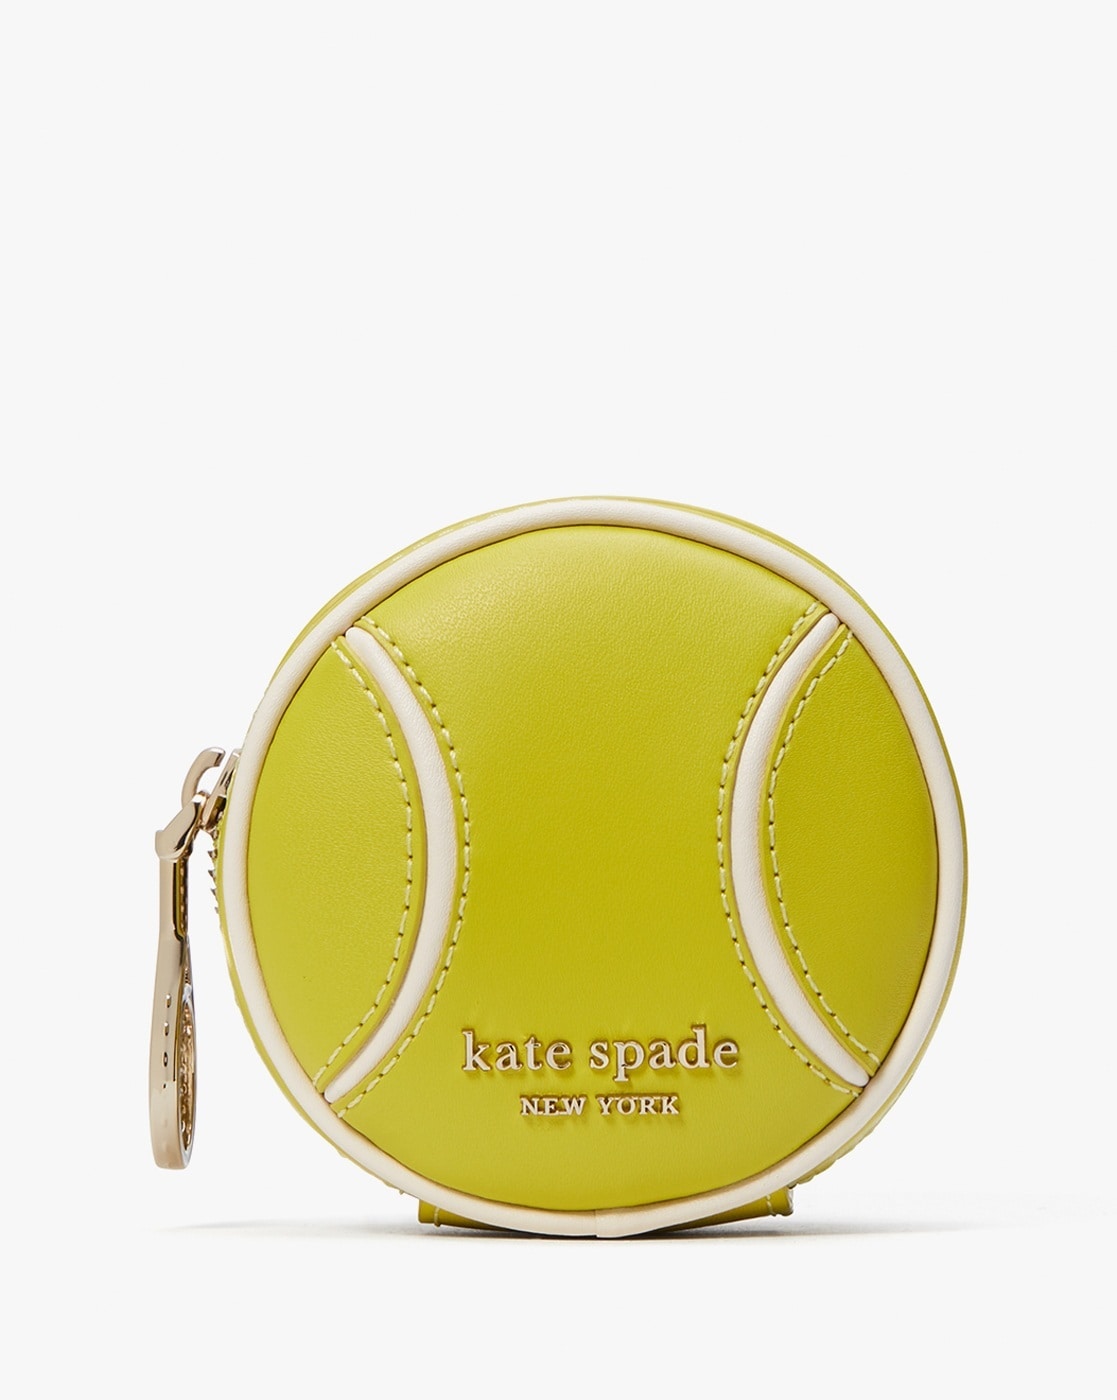 New With Tags - Kate Spade Lemon Coin Purse (Limoncello) | eBay